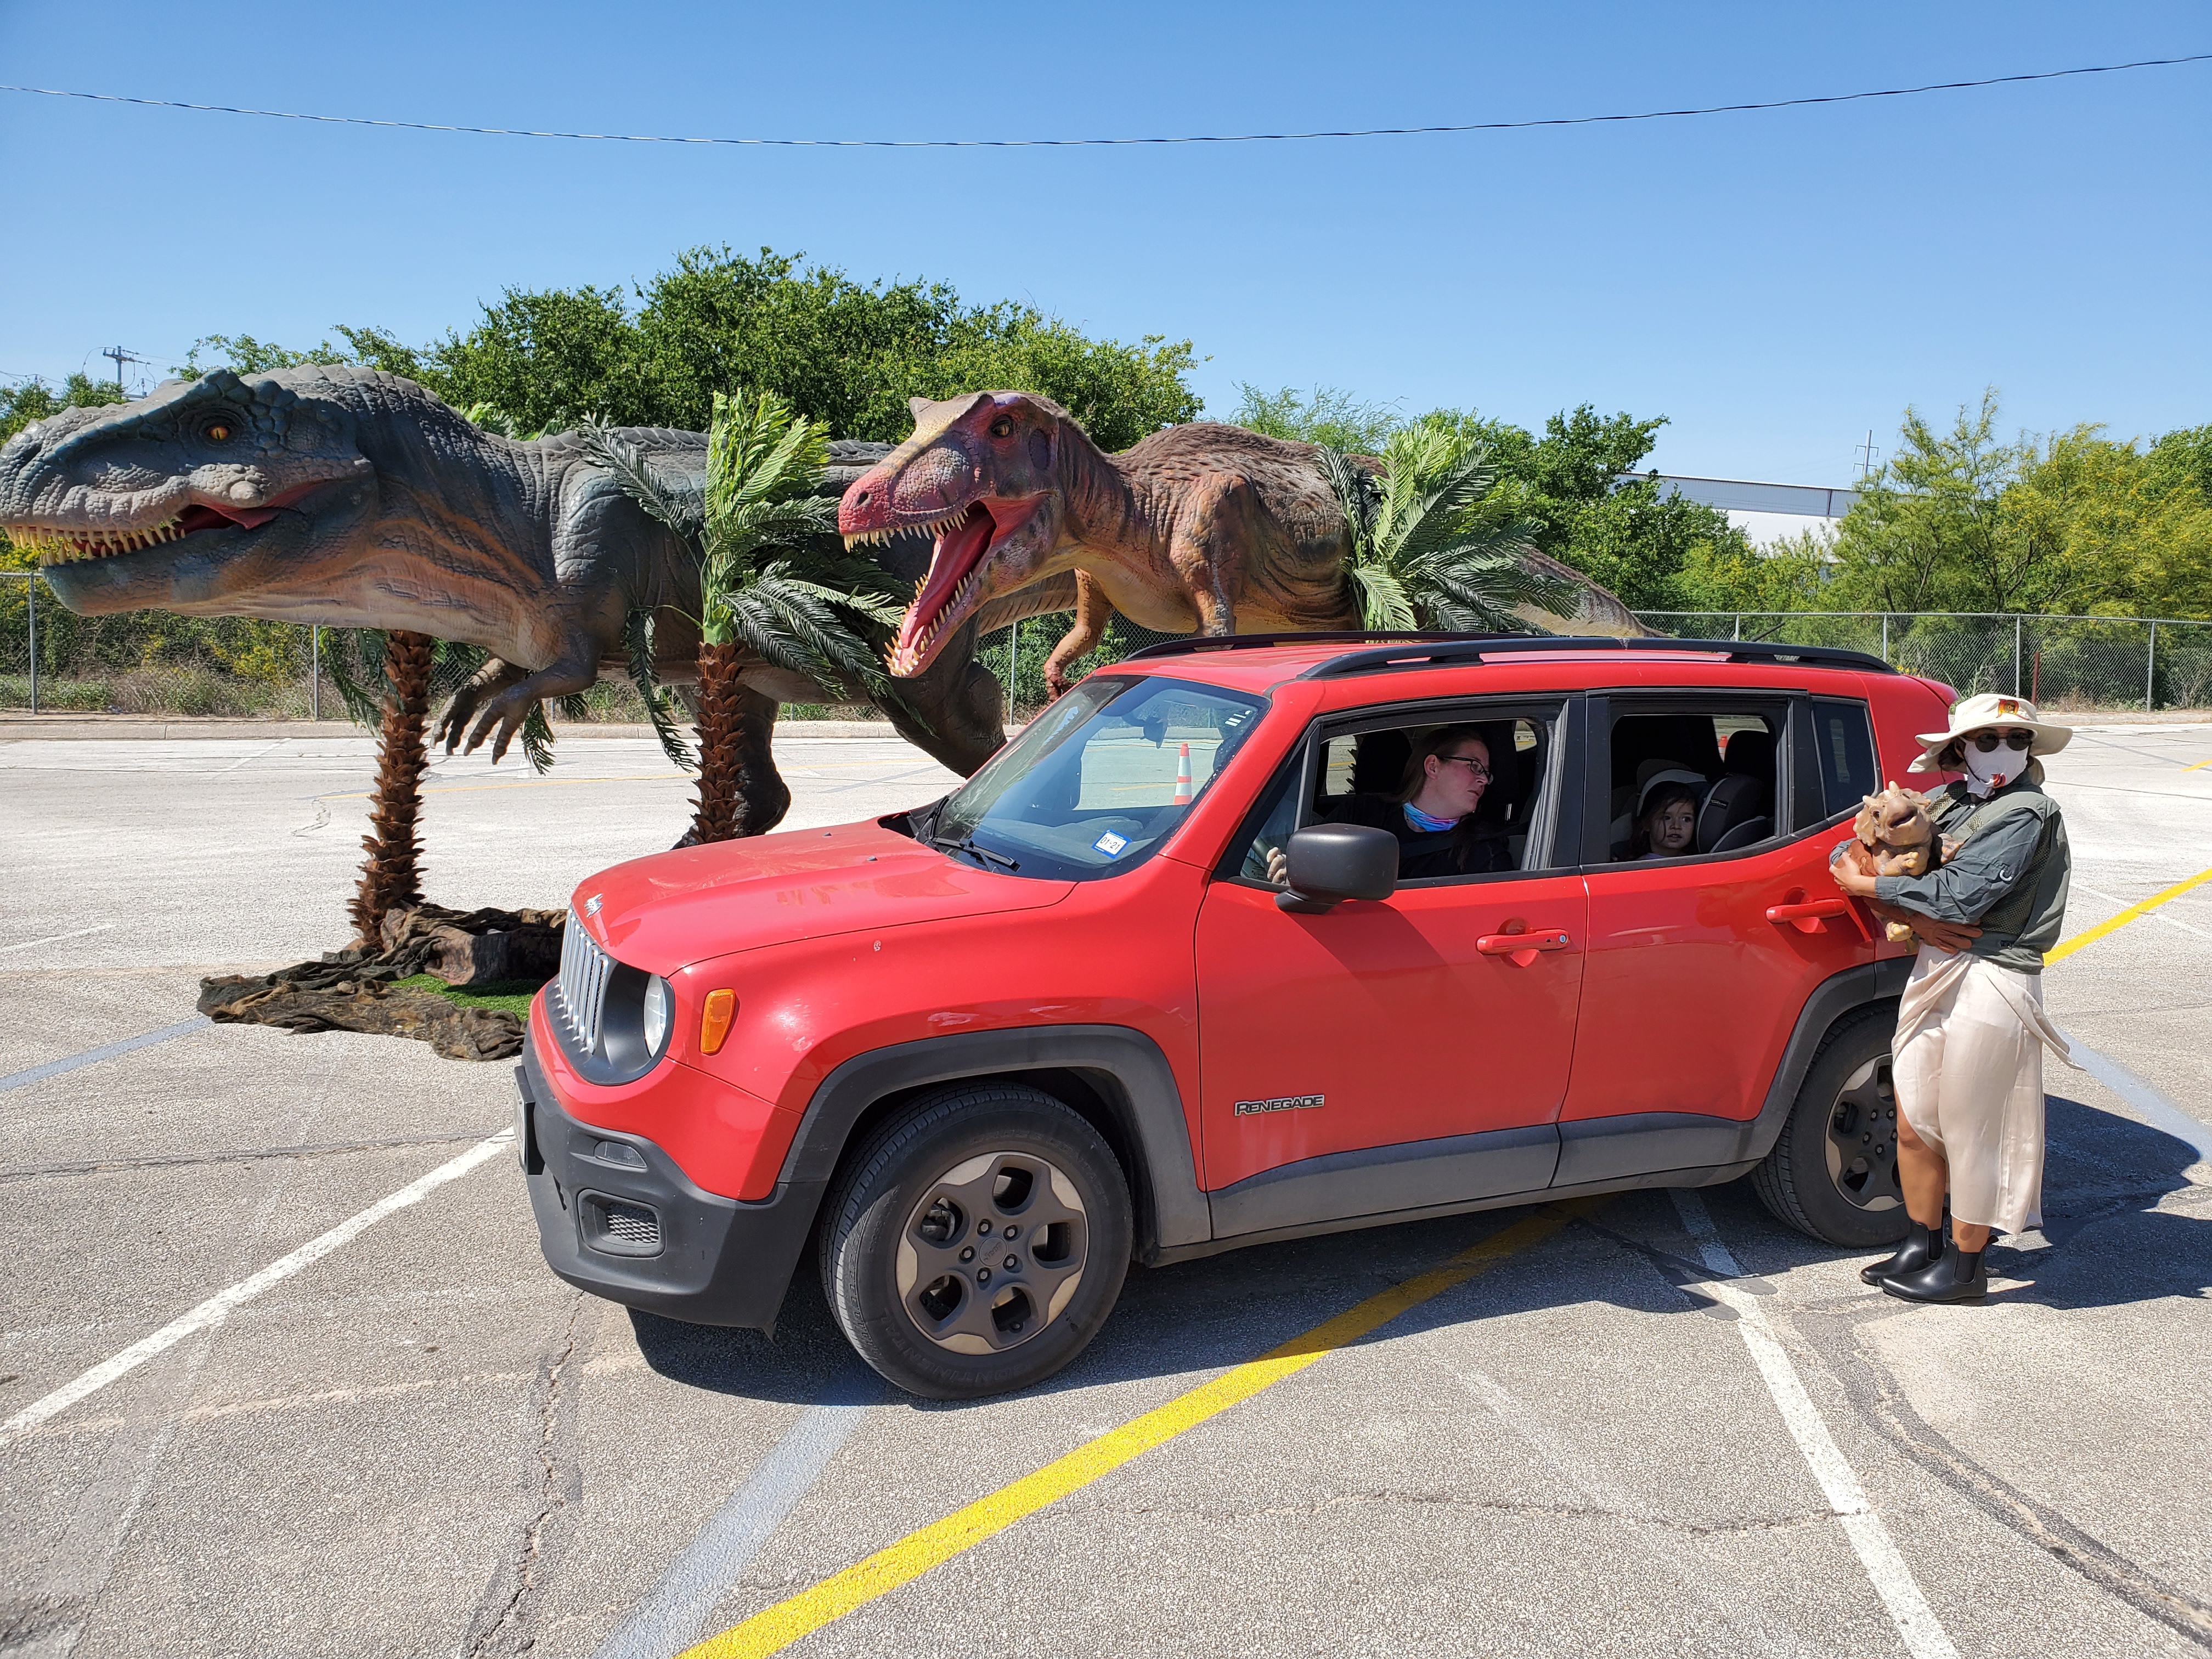 Jurassic Quest Drive Thru Dinosaur Exhibit Is Coming To Cincinnati